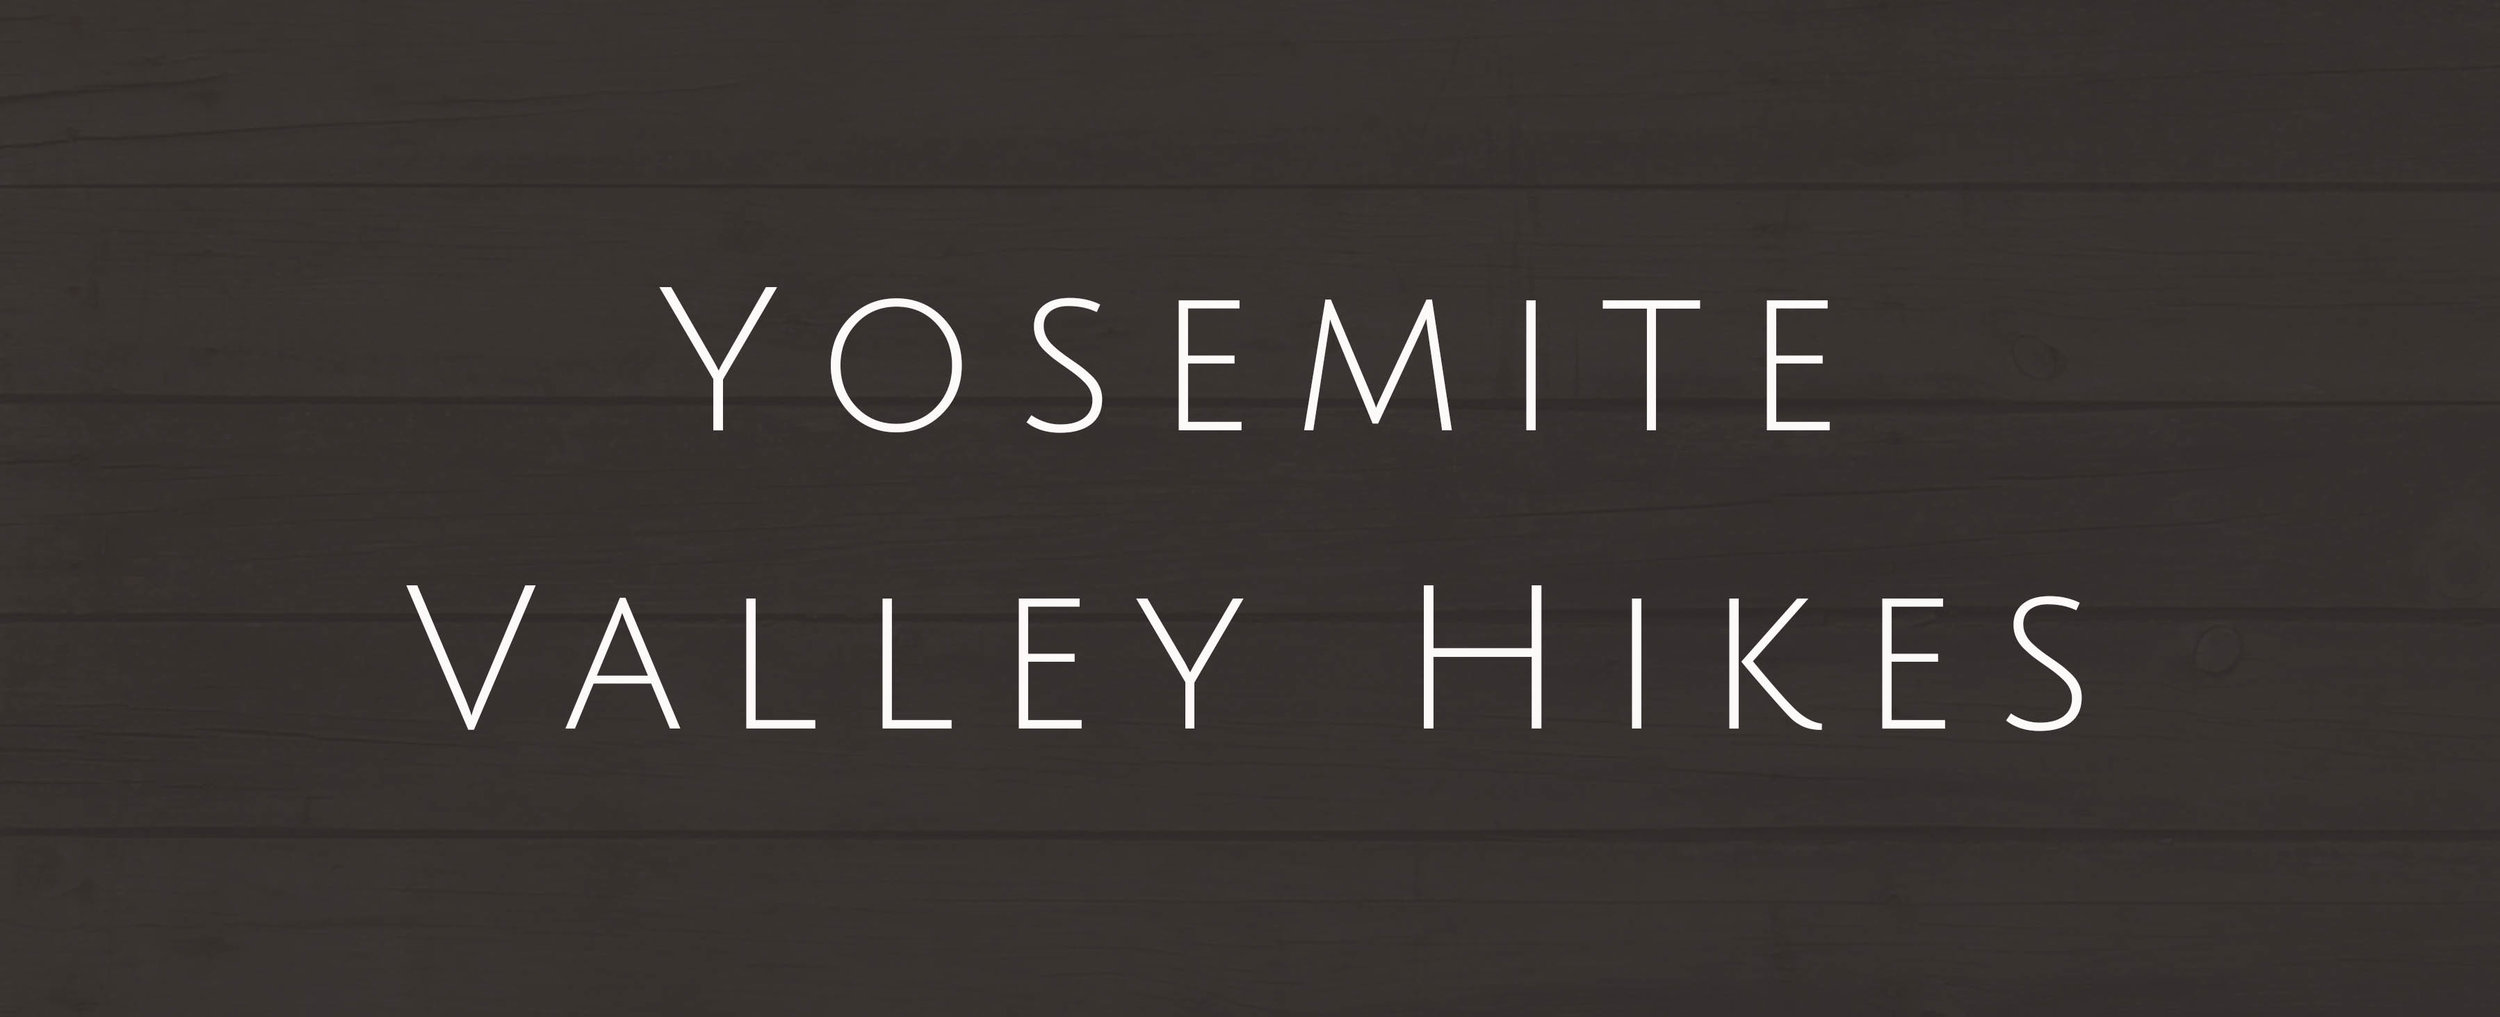 Yosemite - Valley Hikes.jpg